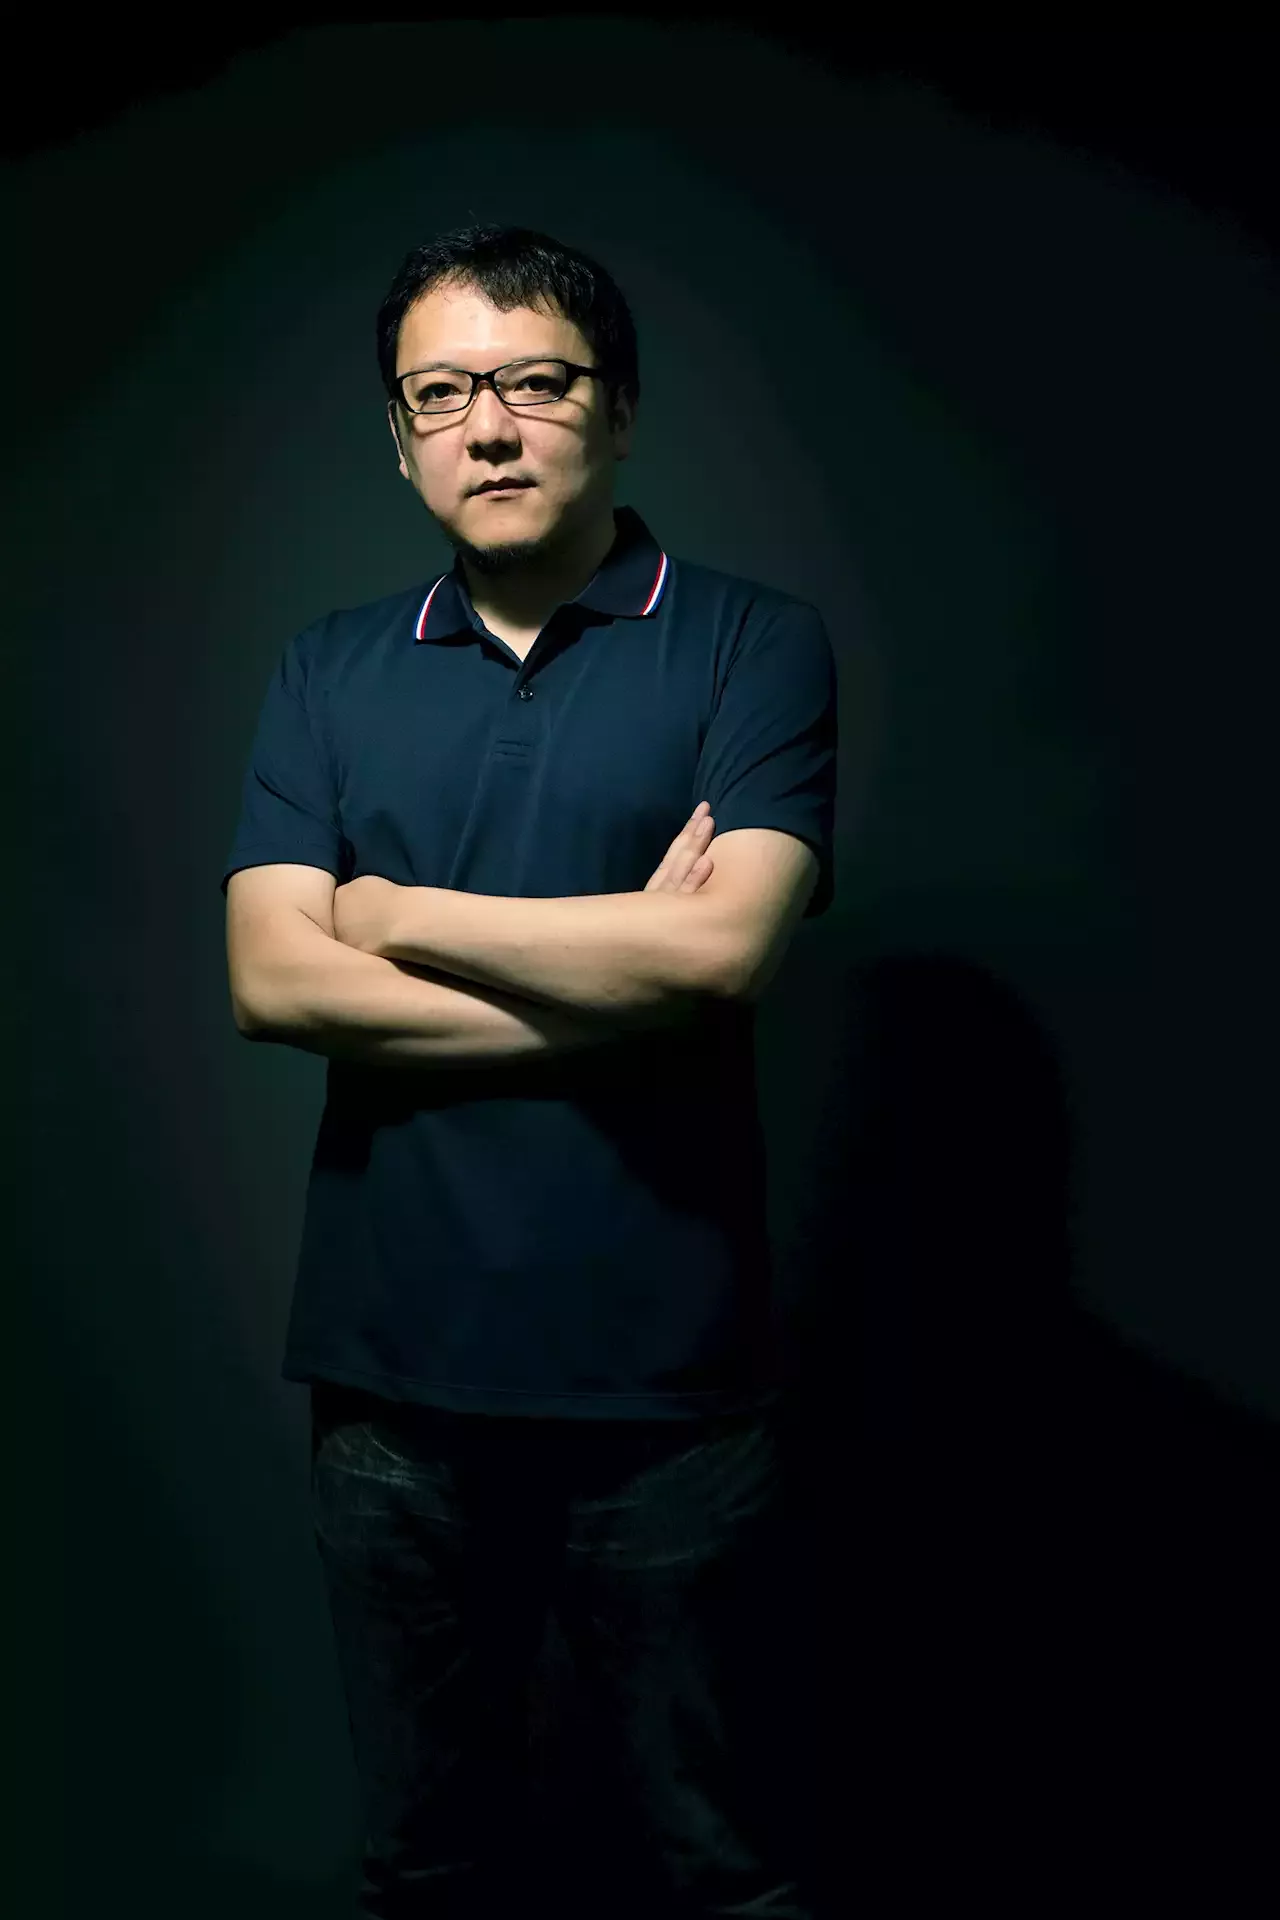 Neil Druckmann calls Elden Ring “great ambassador for video games” as  Hidetaka Miyazaki makes TIME100 list